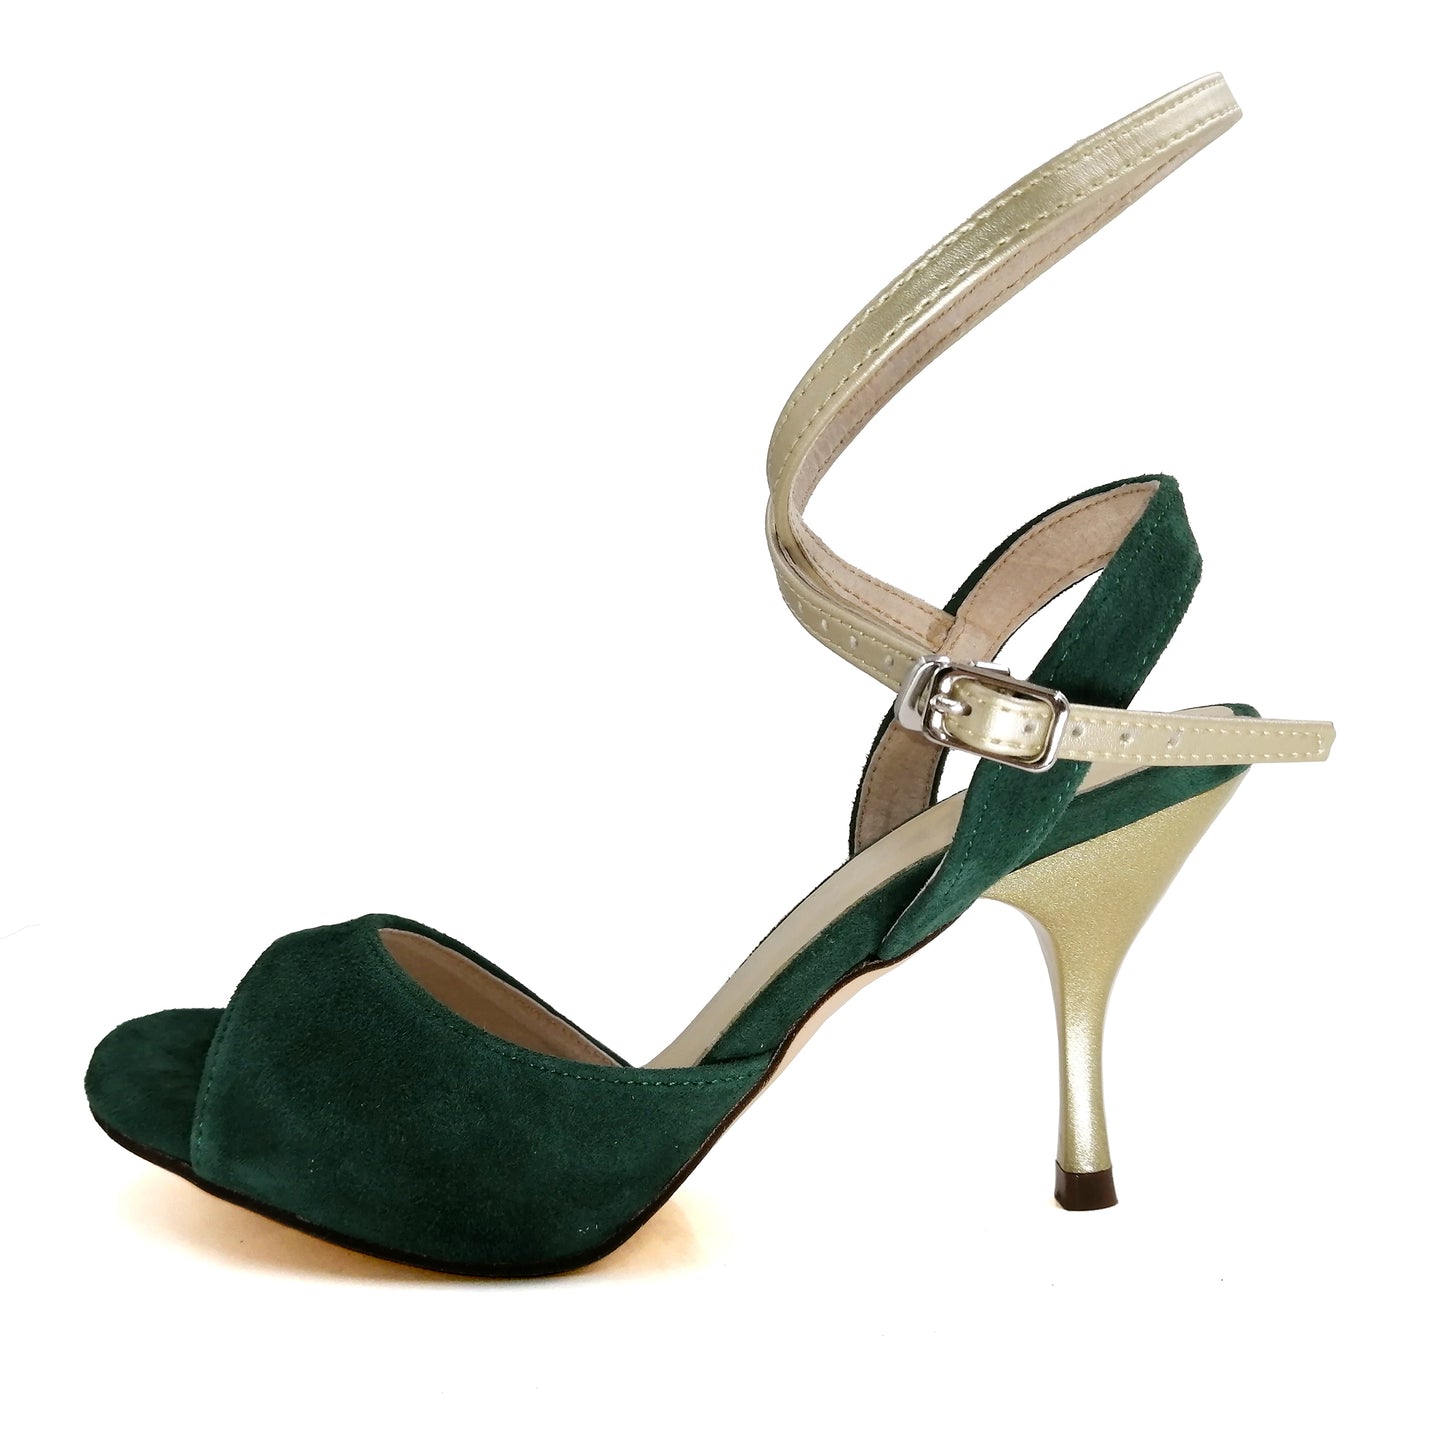 Pro Dancer Argentine Tango Dance Shoes High Heel Dancing Sandals Leather Sole Dark Green (PD-9006C)